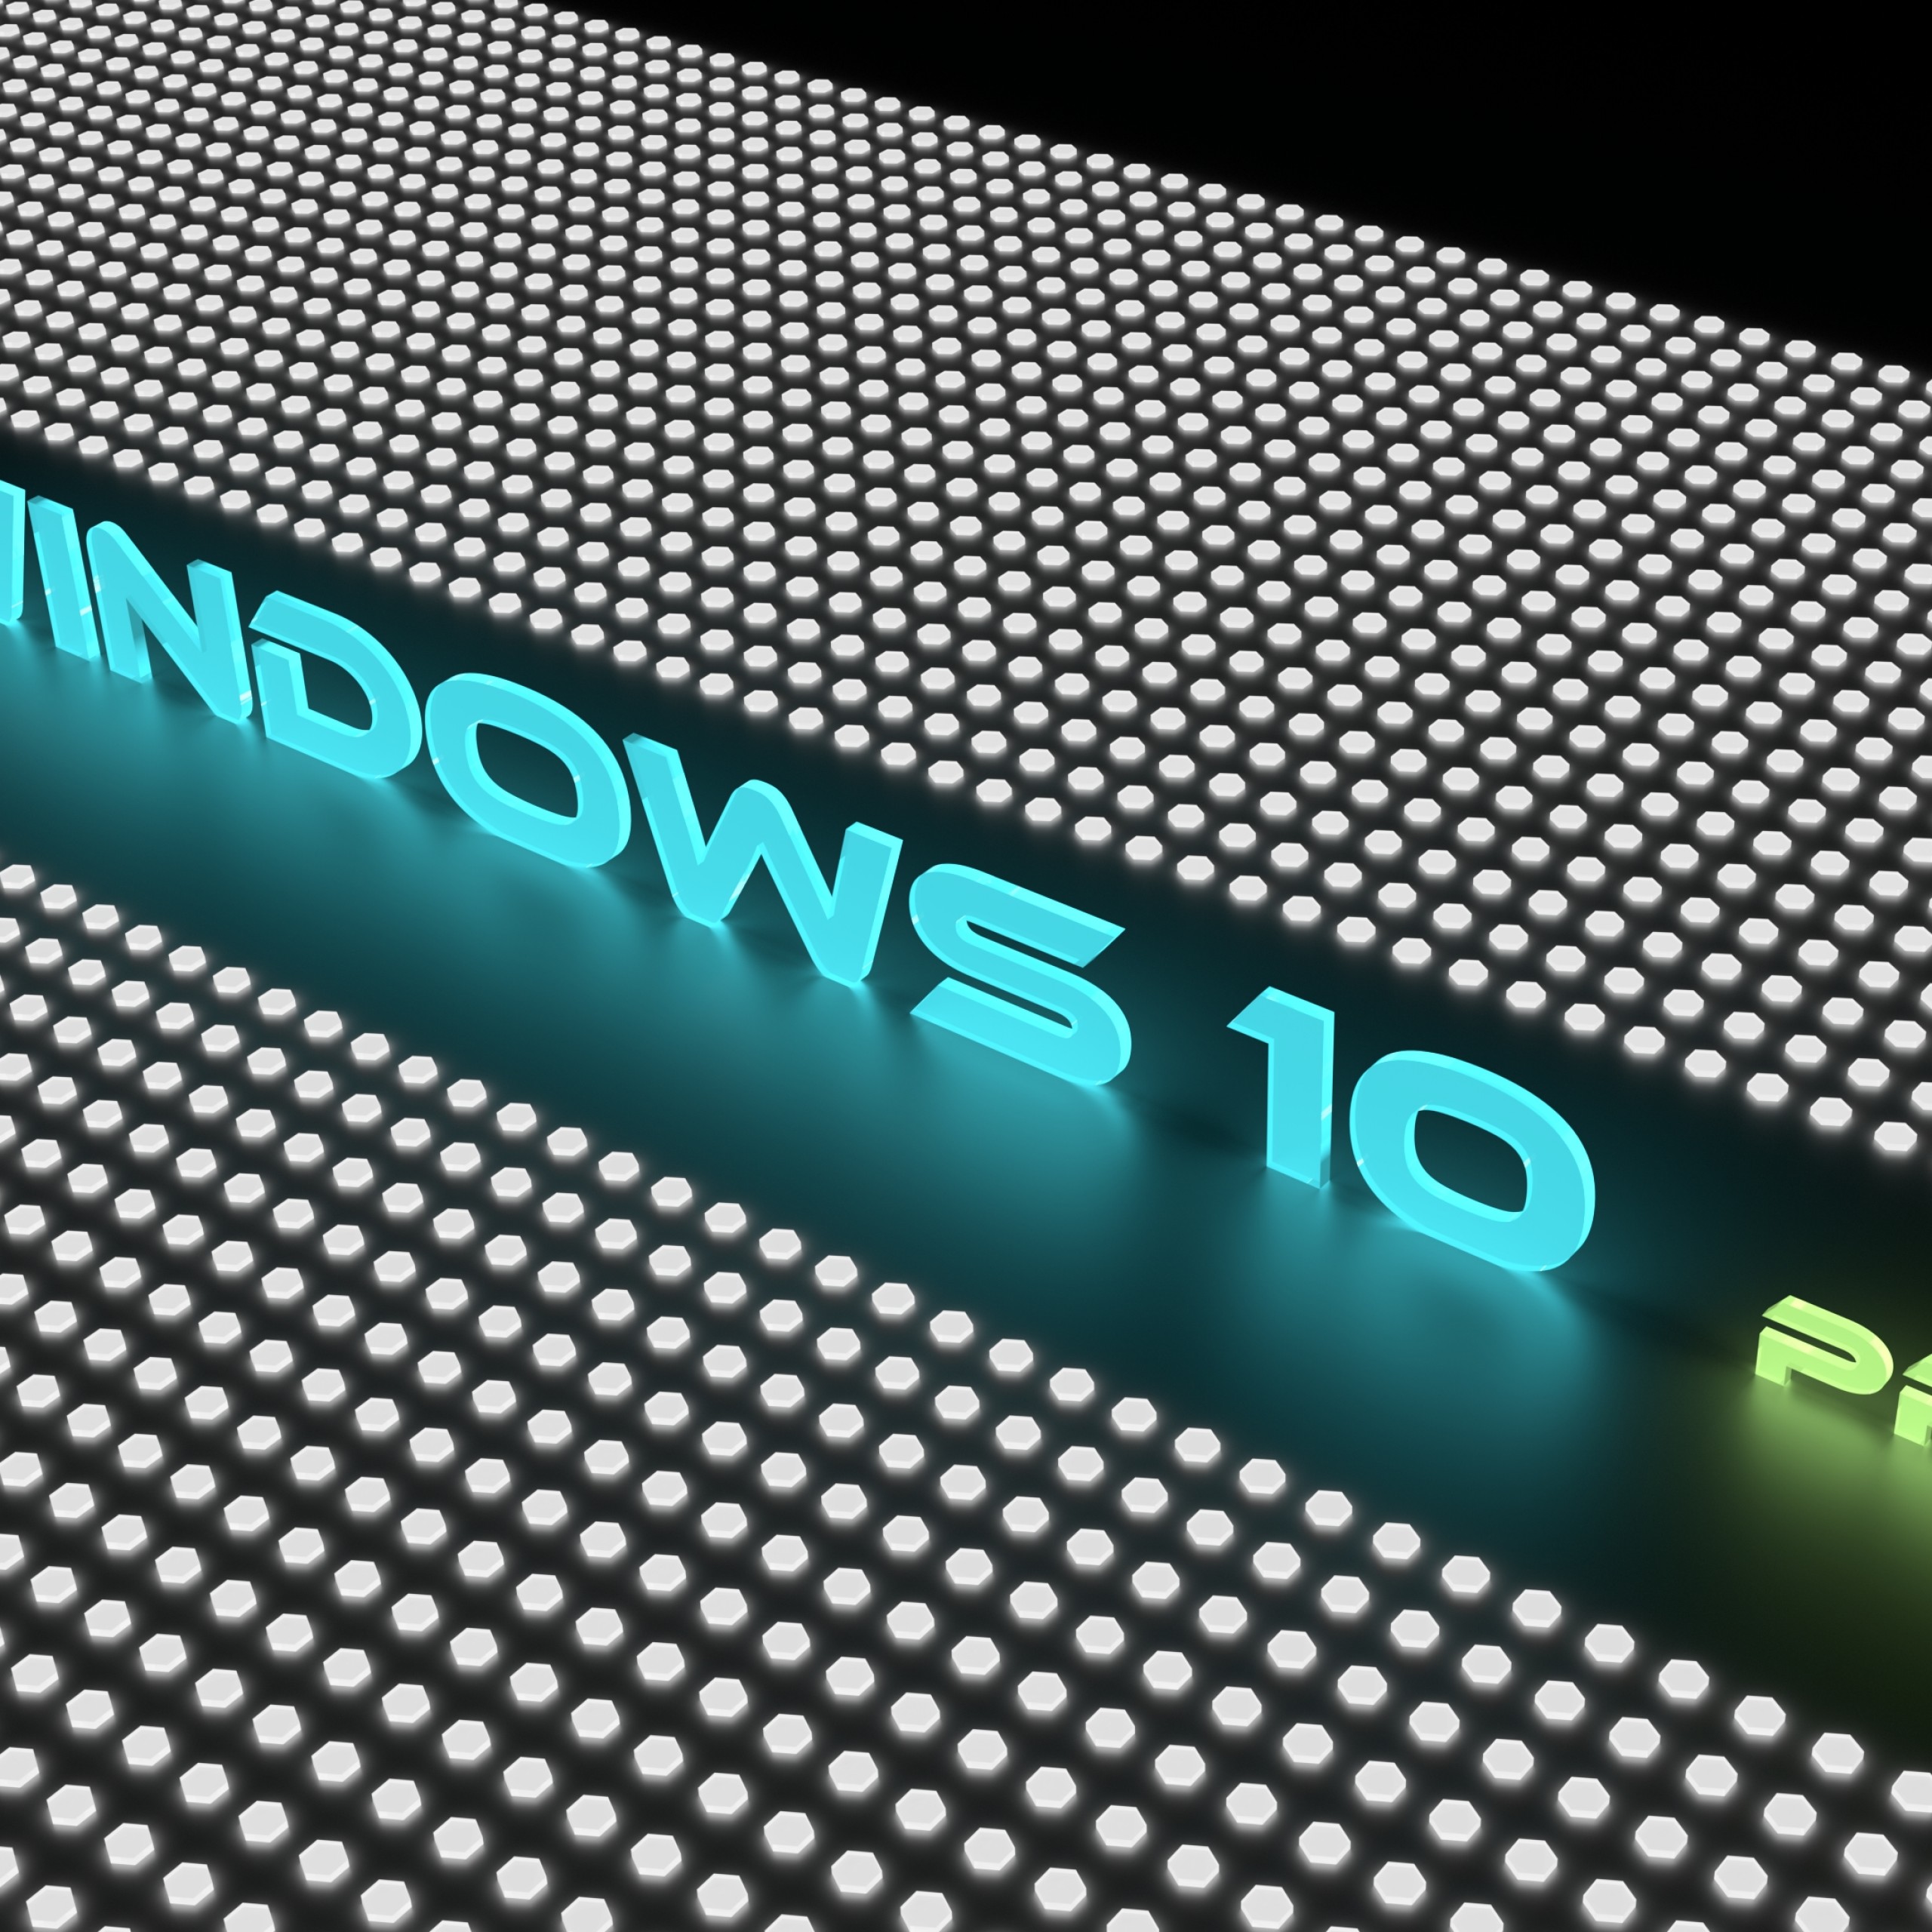 Windows 10 Pro Background - HD Wallpaper 